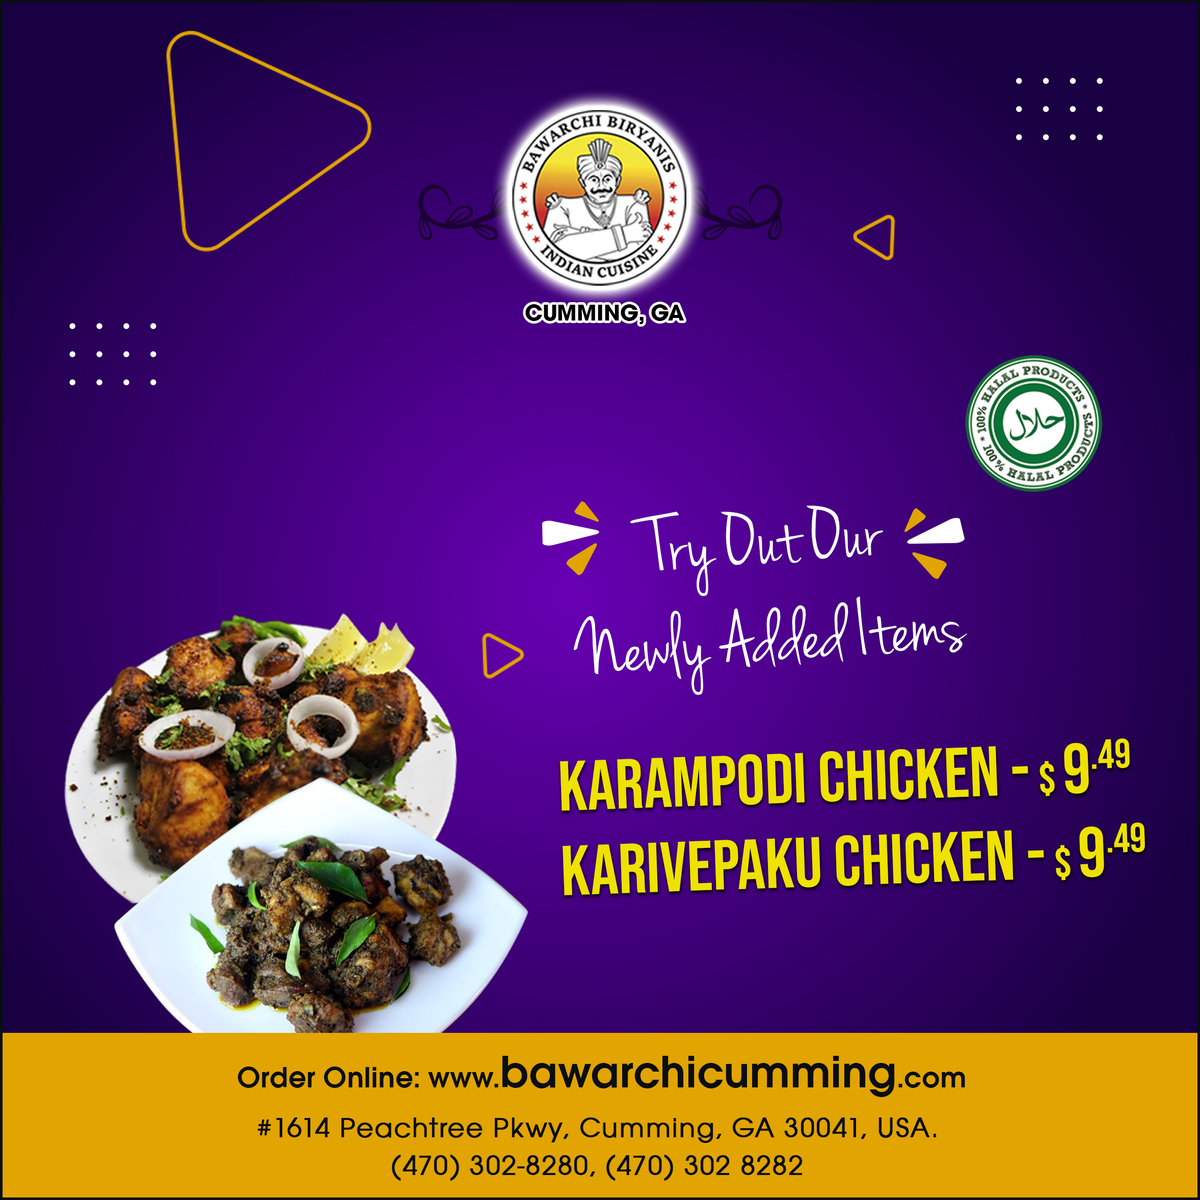 Try Out Our Newly Added Items🤗🤗
Karampodi chicken
Karivepaku chicken
Order Online @ bit.ly/bawarchicumming

#BawarchiCumming #BawarchiBiryani #SouthIndianRestaurant #AndhraSpecialBiryani #OrderOnline #Muttonliver #yummy #dinner #foodies #orderonlie #specialoffer #indiancuisine